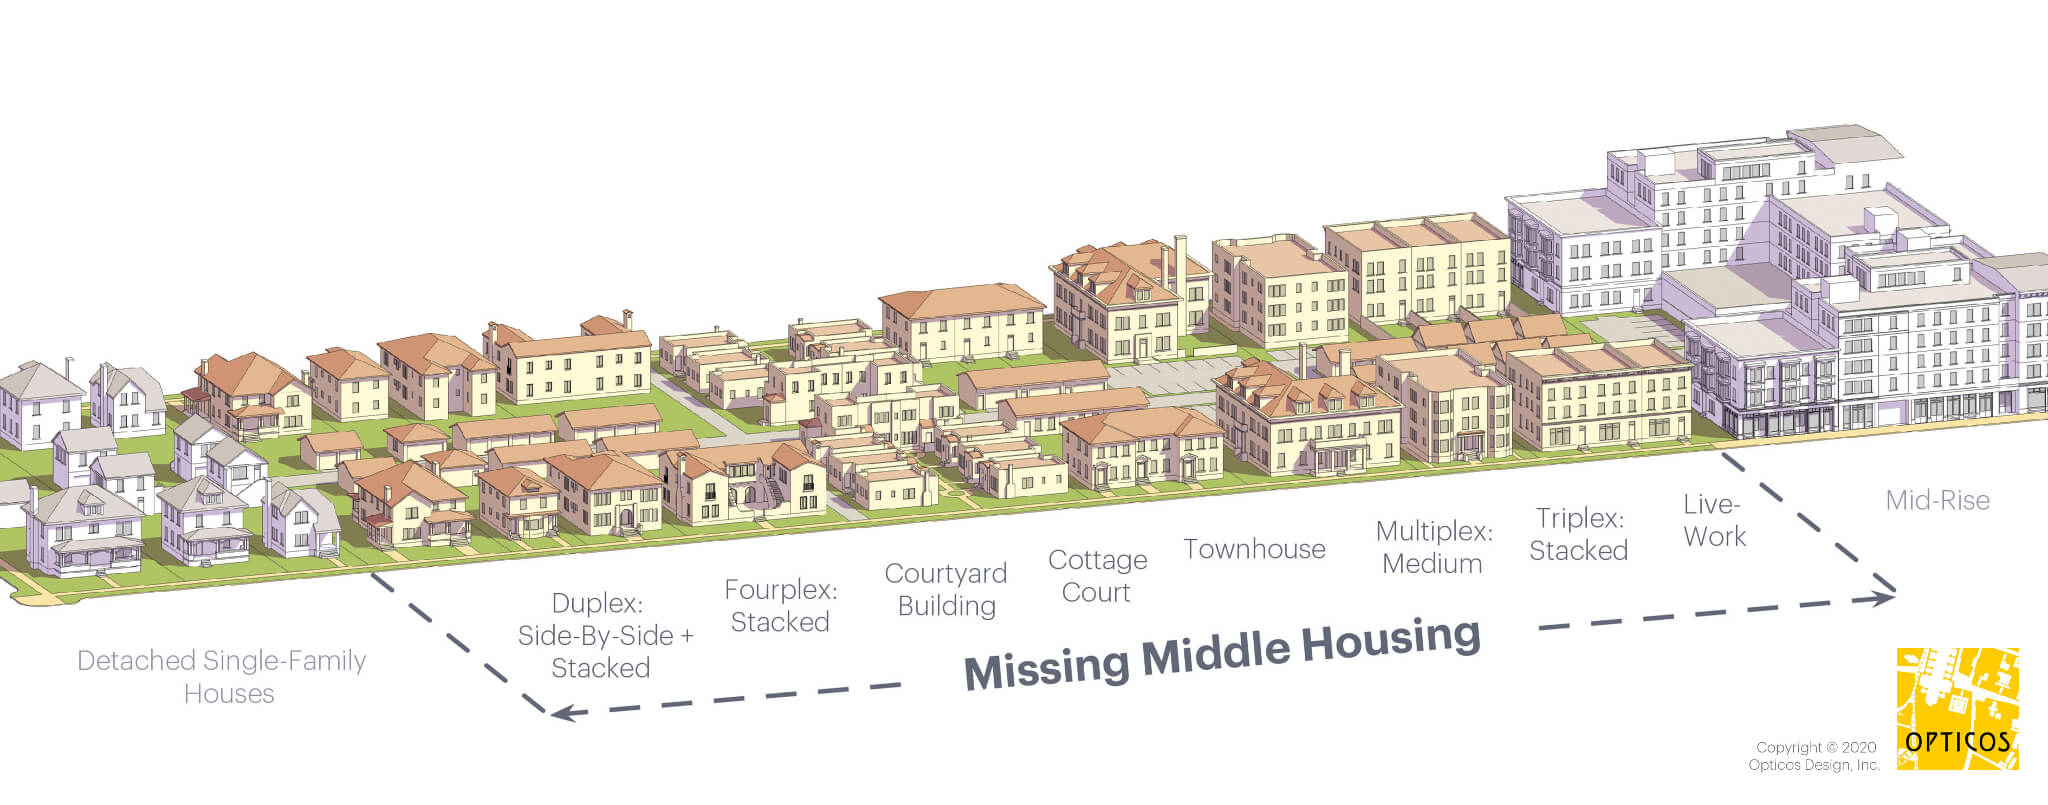 missing middle housing image from Dan Parolek